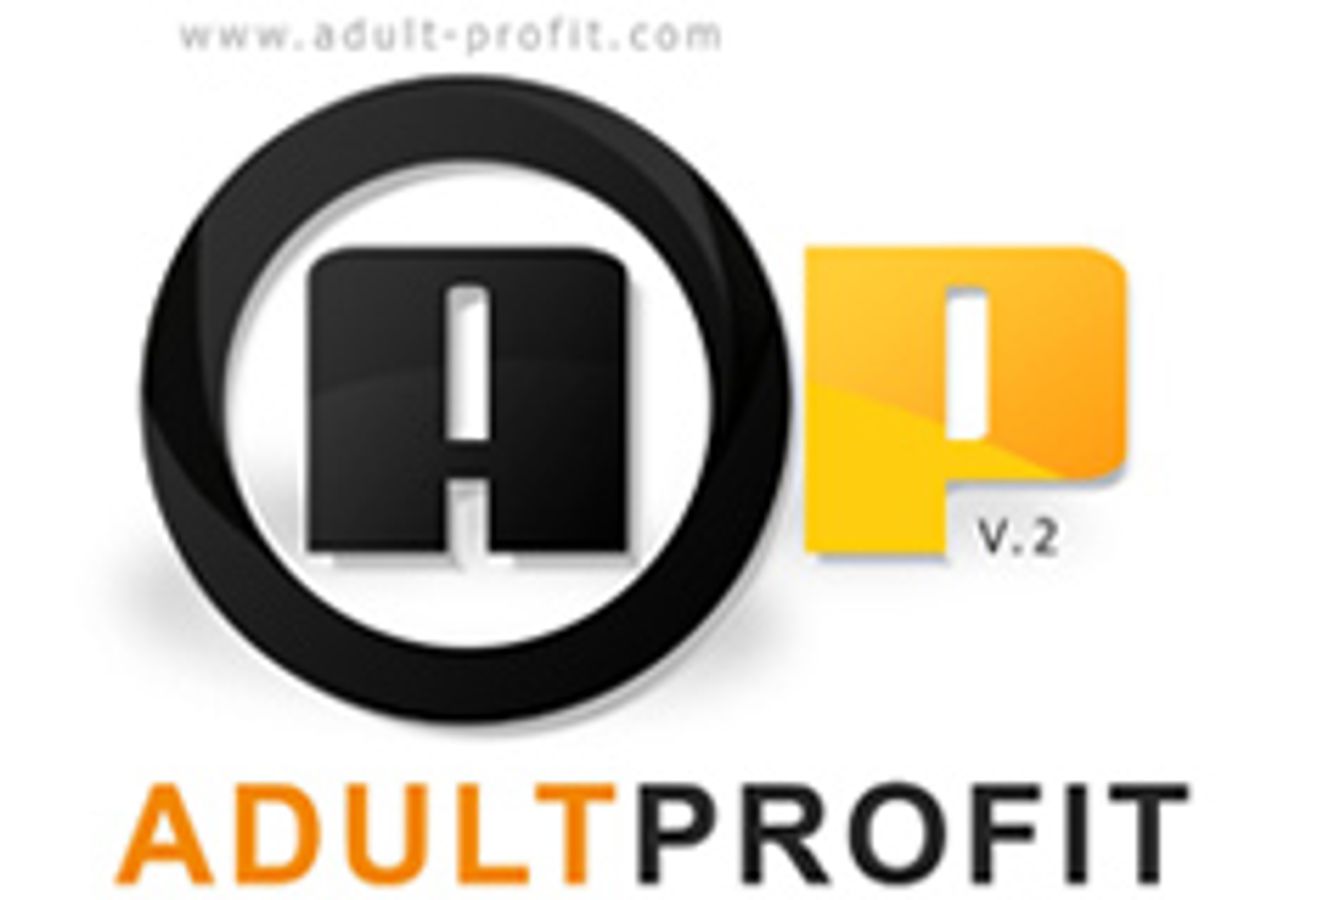 Adult Profit